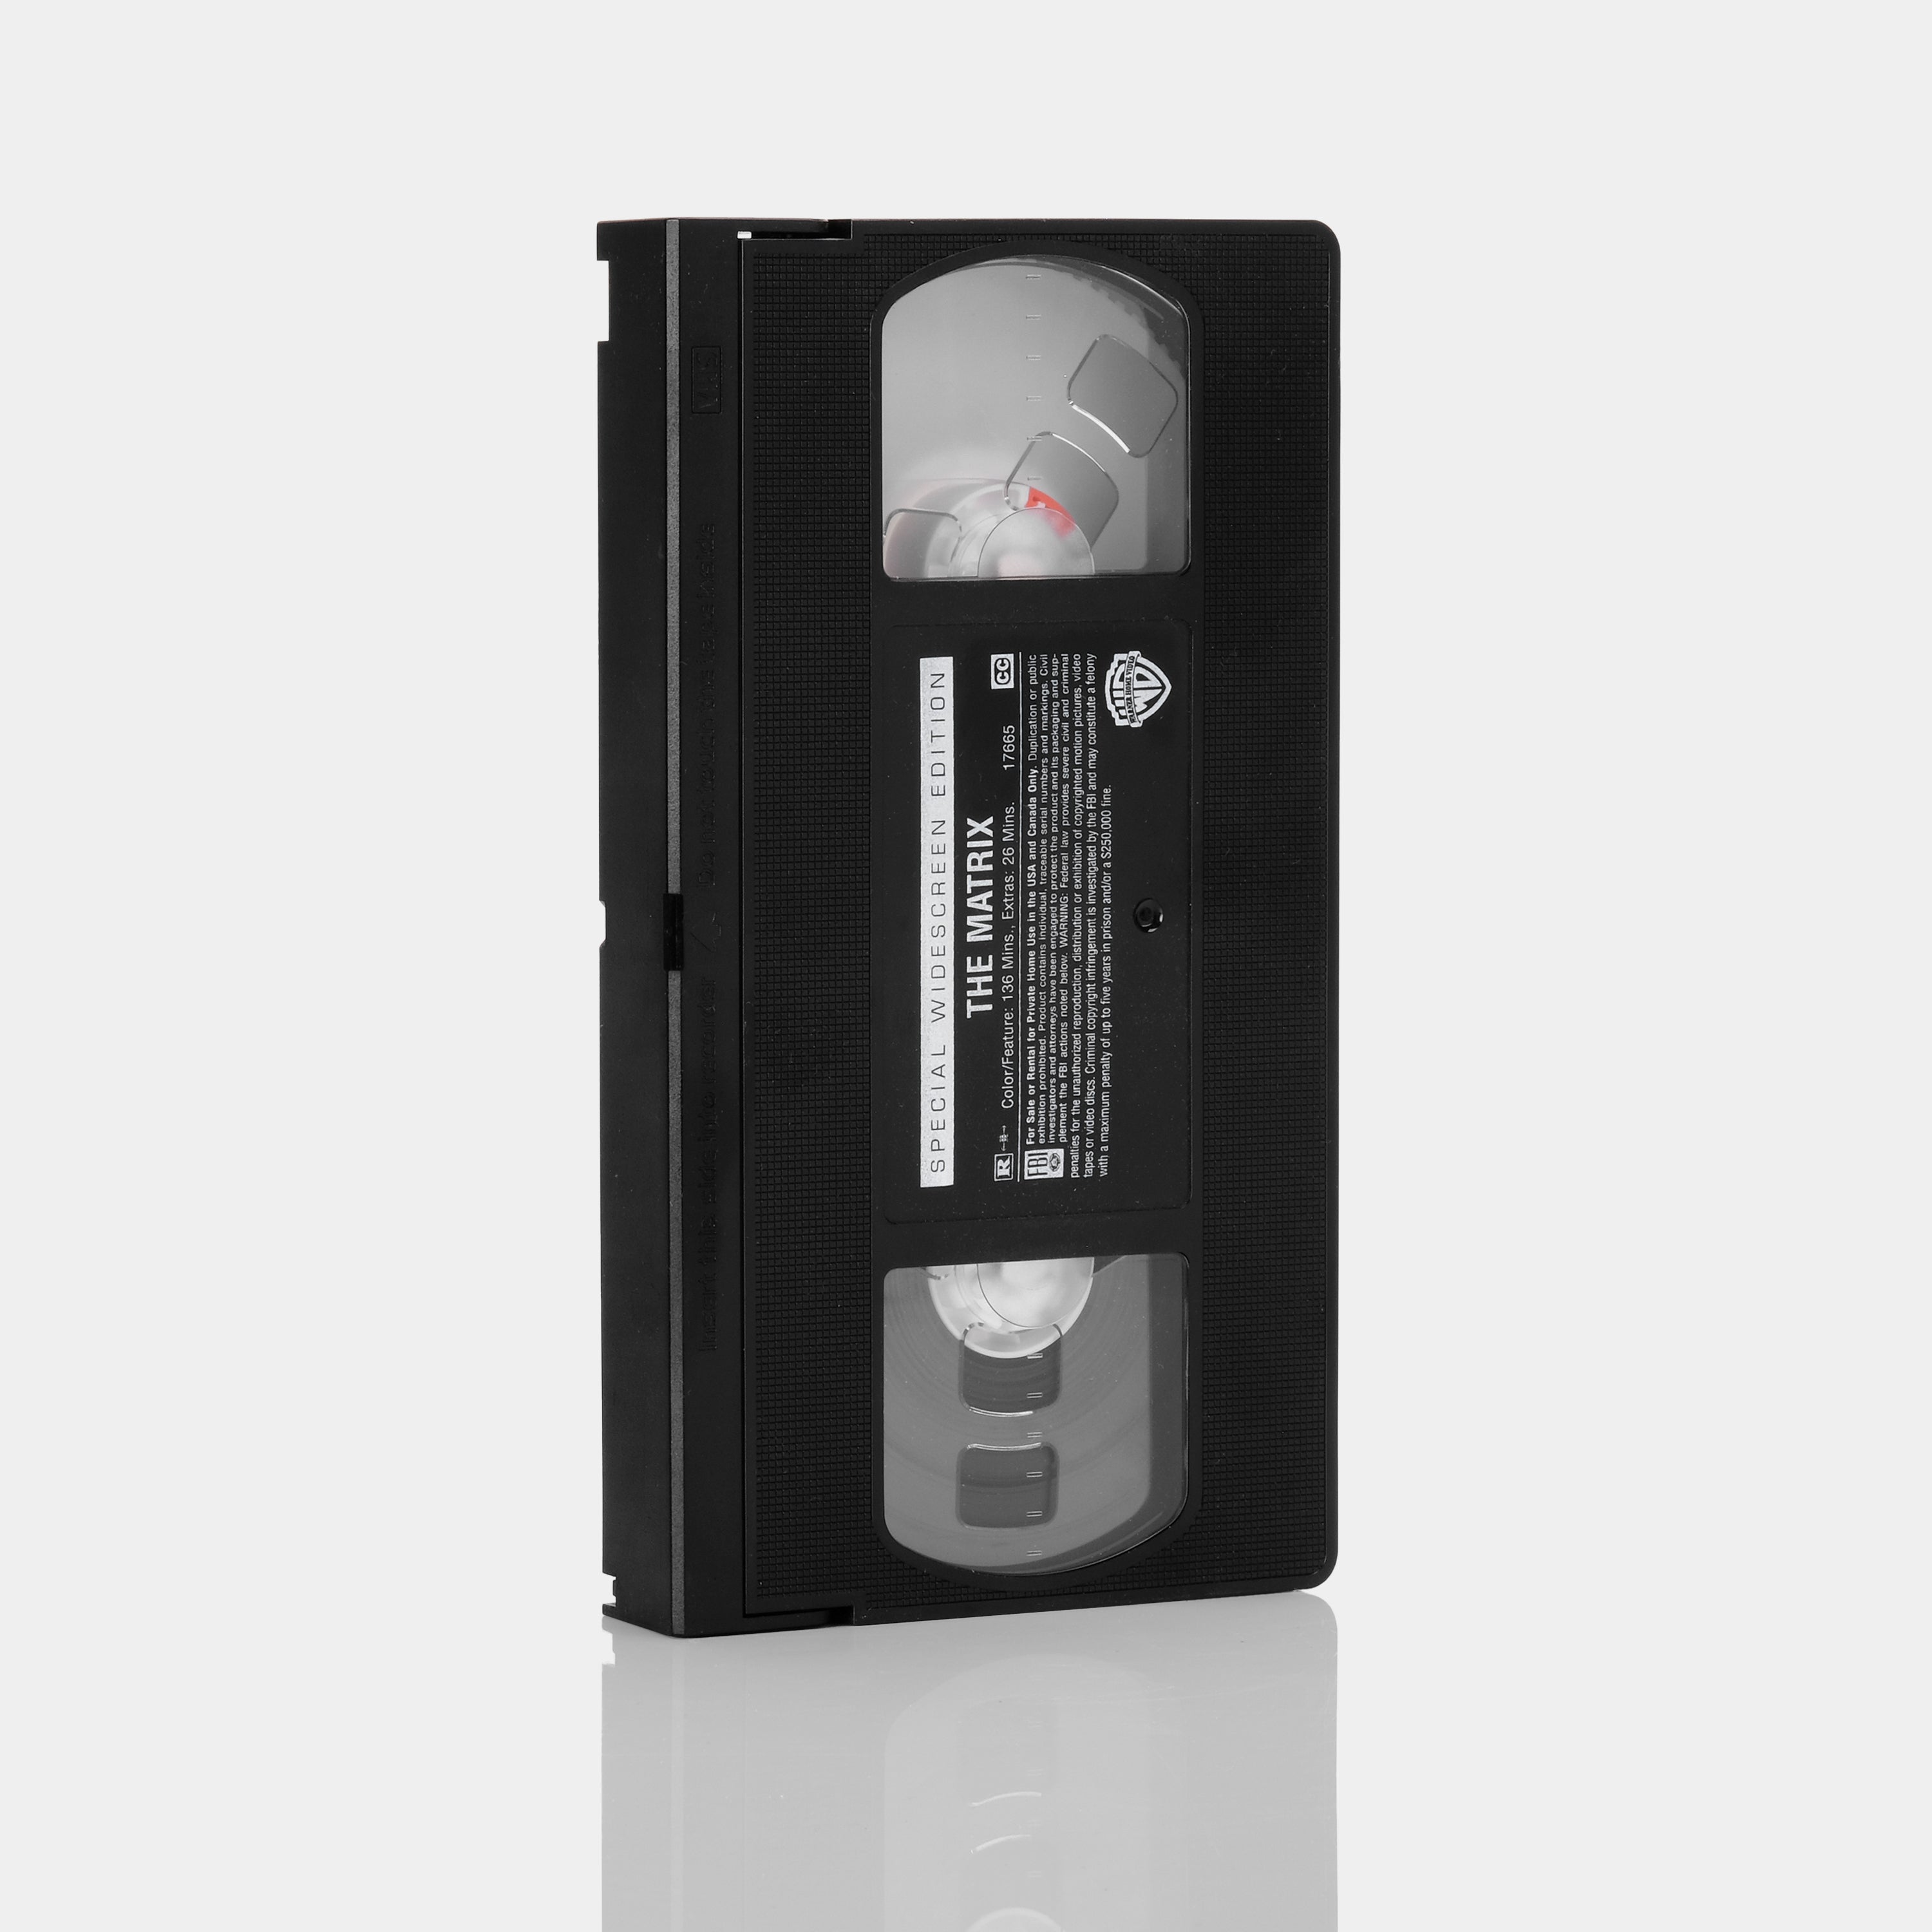 The Matrix VHS Tape